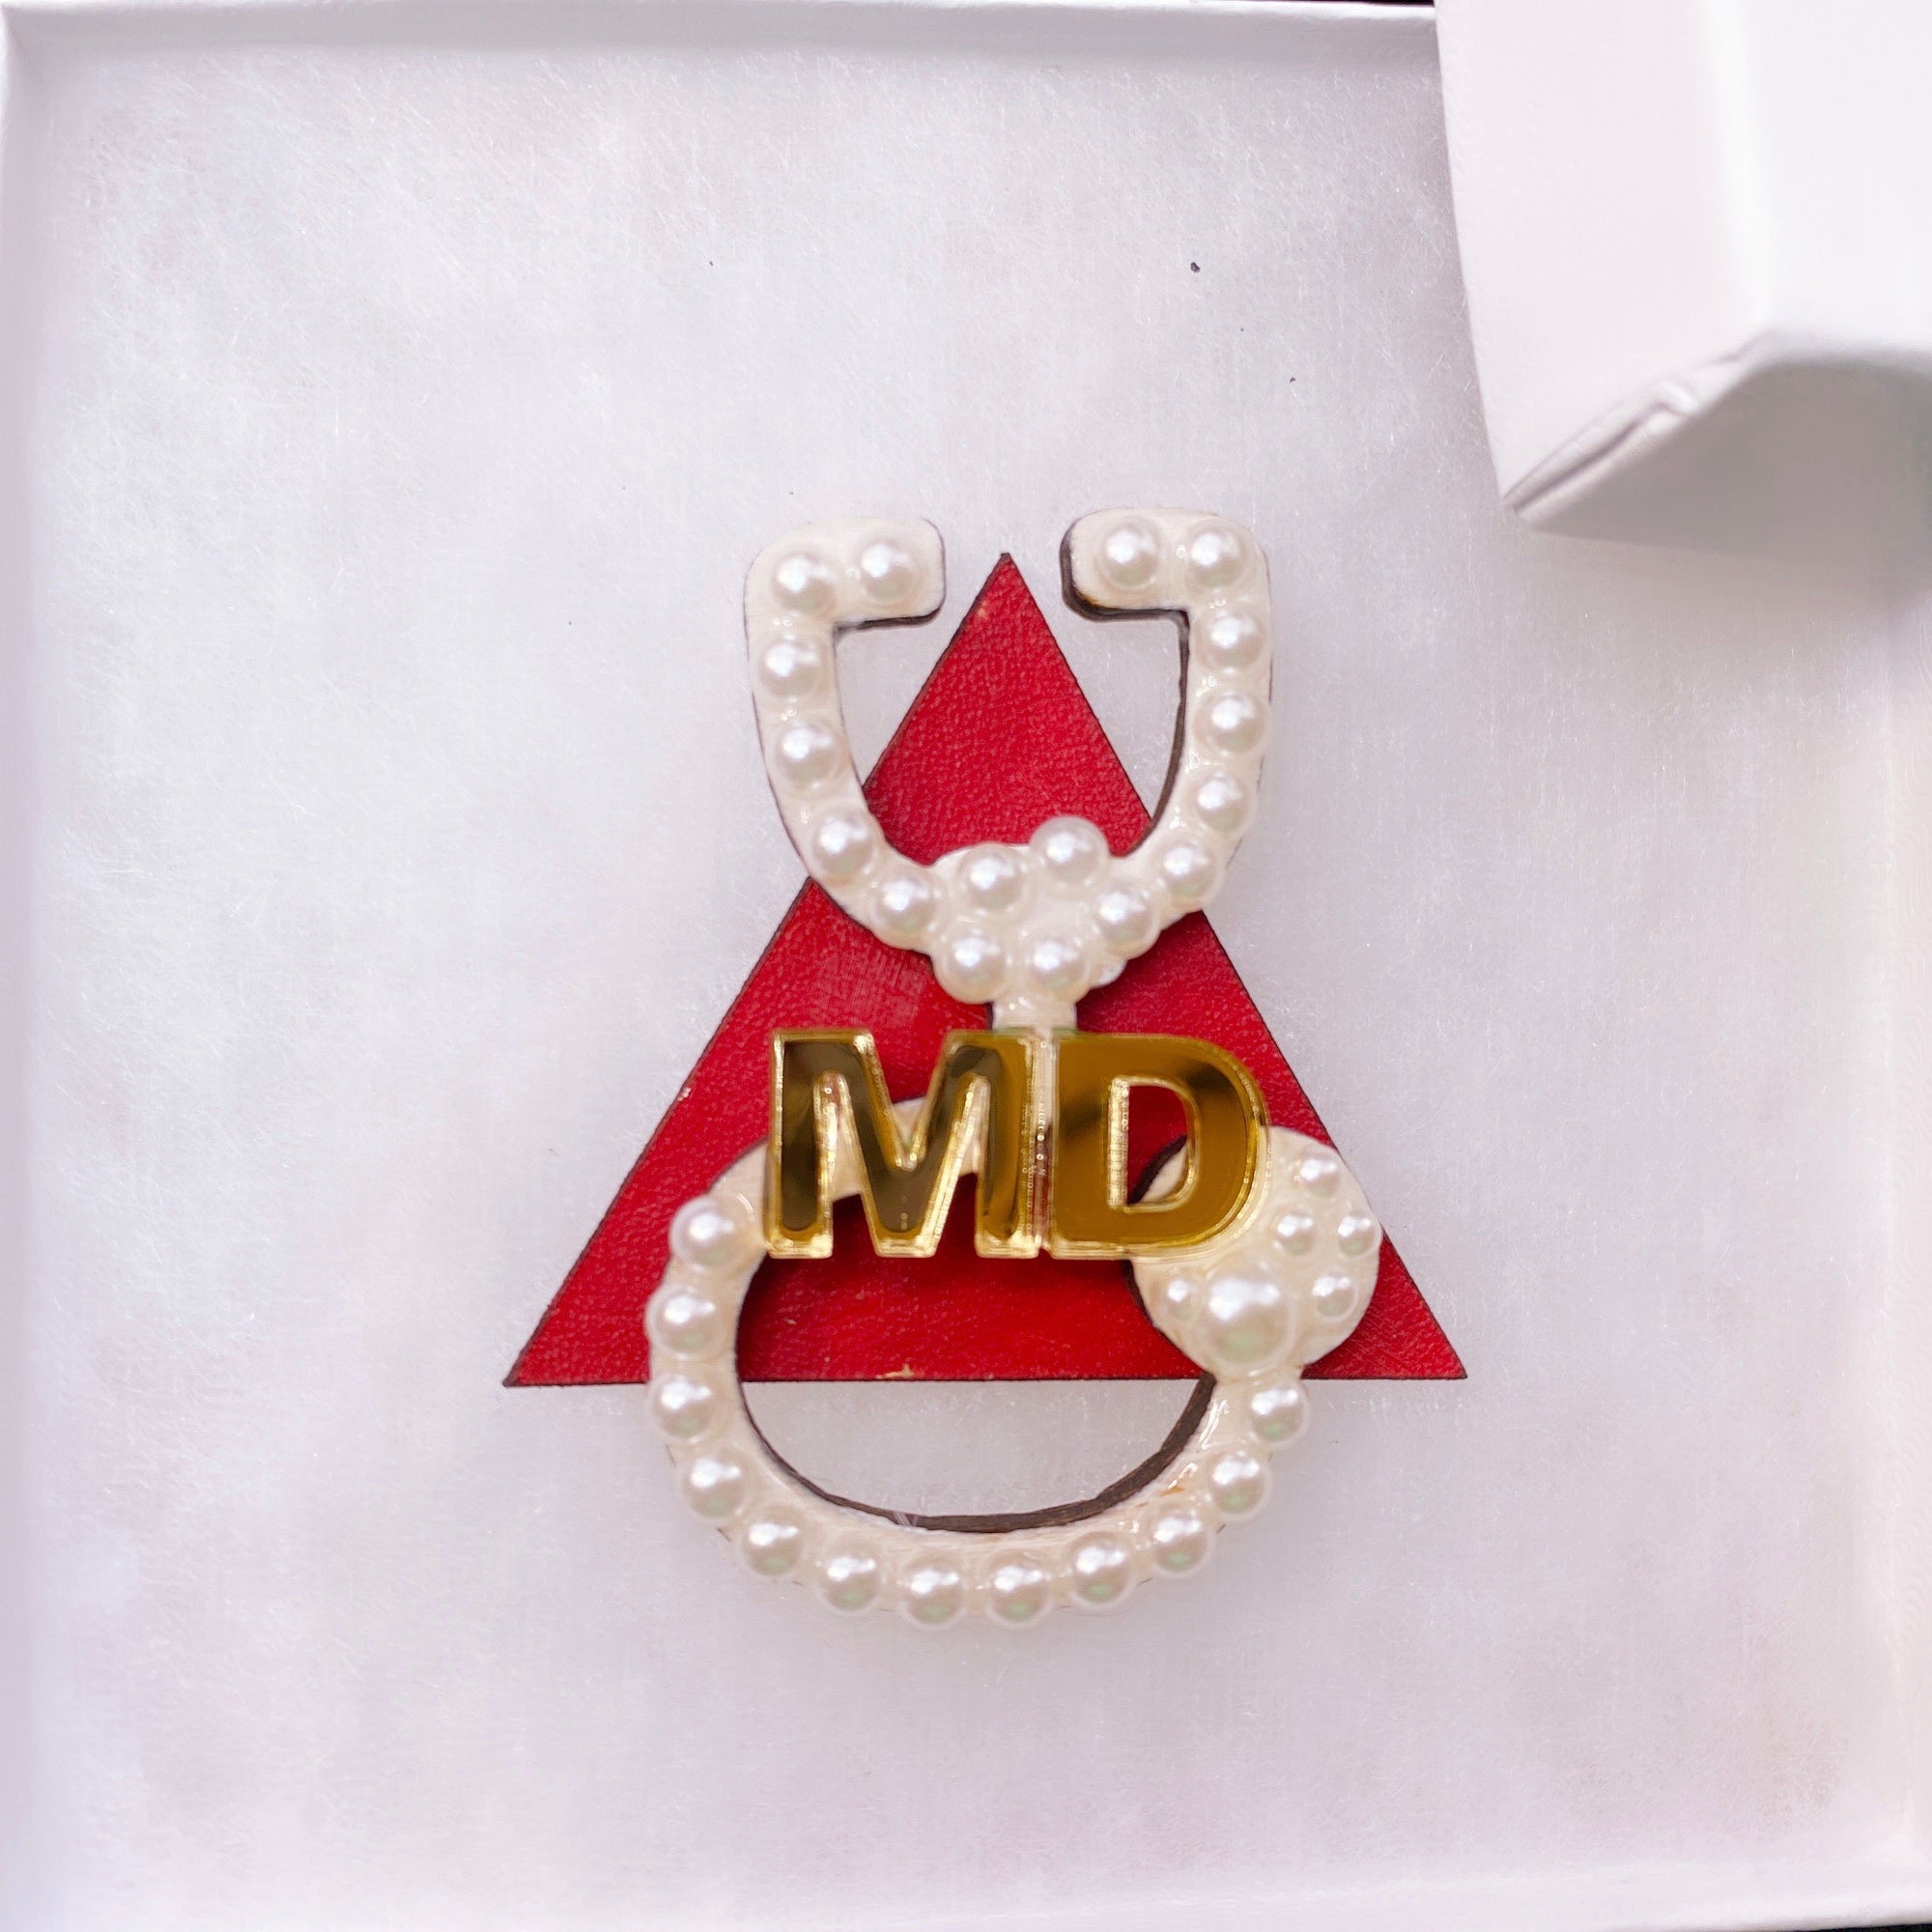 Handmade crimson and cream MD, Doctor of Medicine, lapel pin, brooch and pendants for Delta Sigma Theta sorors.